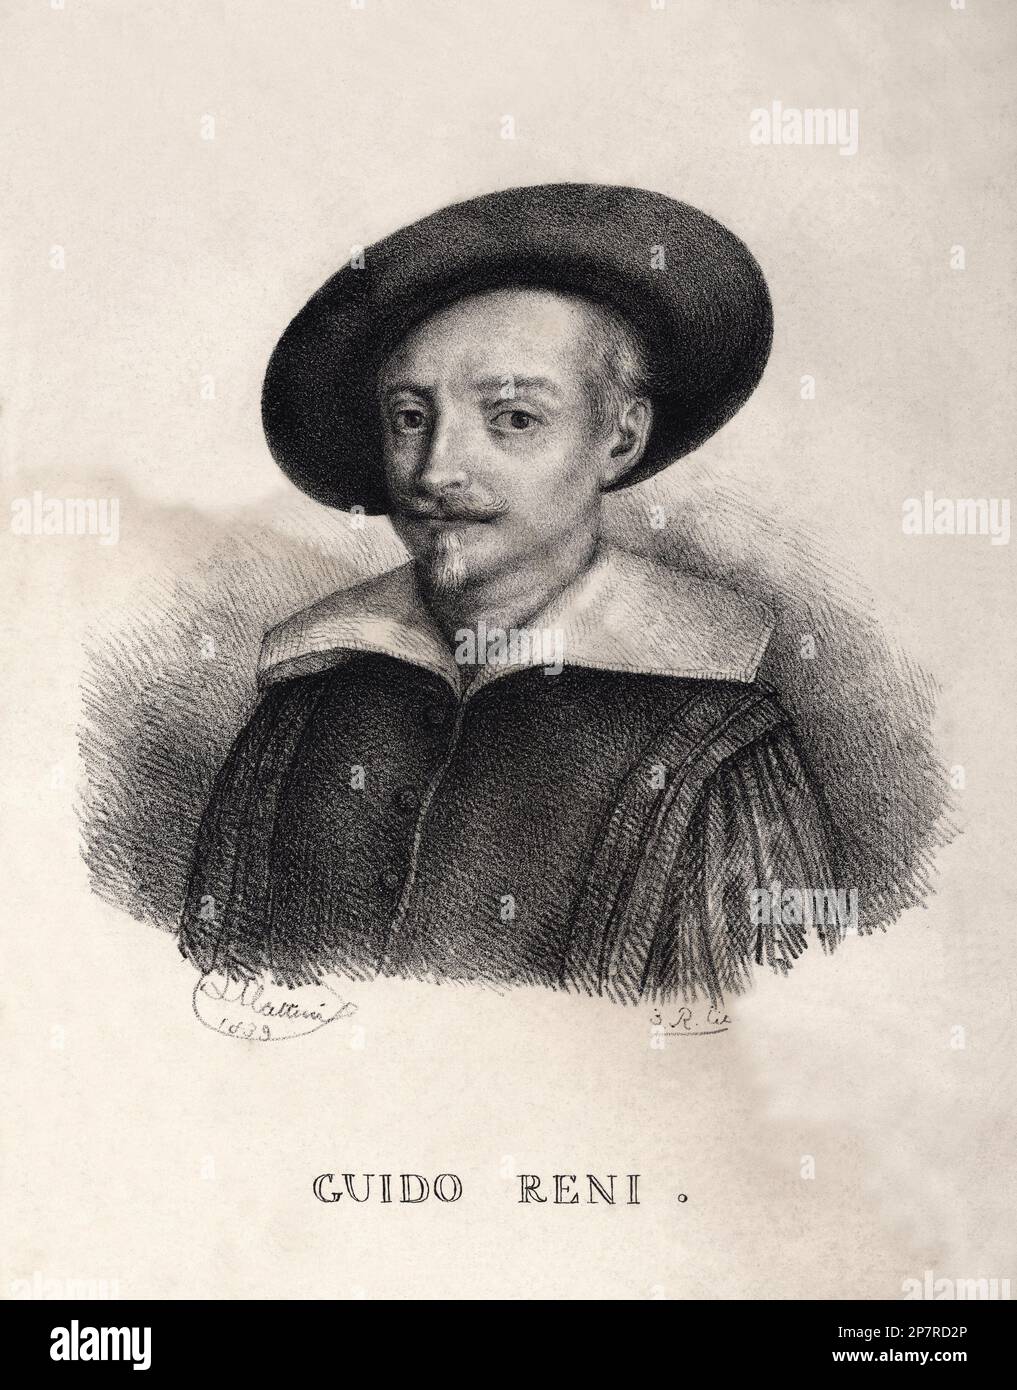 Der italienische Maler GUIDO RENI ( Bologna 1575 - 1642 ) . Eingraviertes Porträt von Mattina ( 1839 ). - PORTRAIT - RITRATTO - Schnurrbart - Baffi - Bart - barba - ARTE - BILDENDE KUNST - ARTI VISIVE - PITTORE - Gravur - Incisione - Kragen - colletto - Hut - cappello --- Archivio GBB Stockfoto